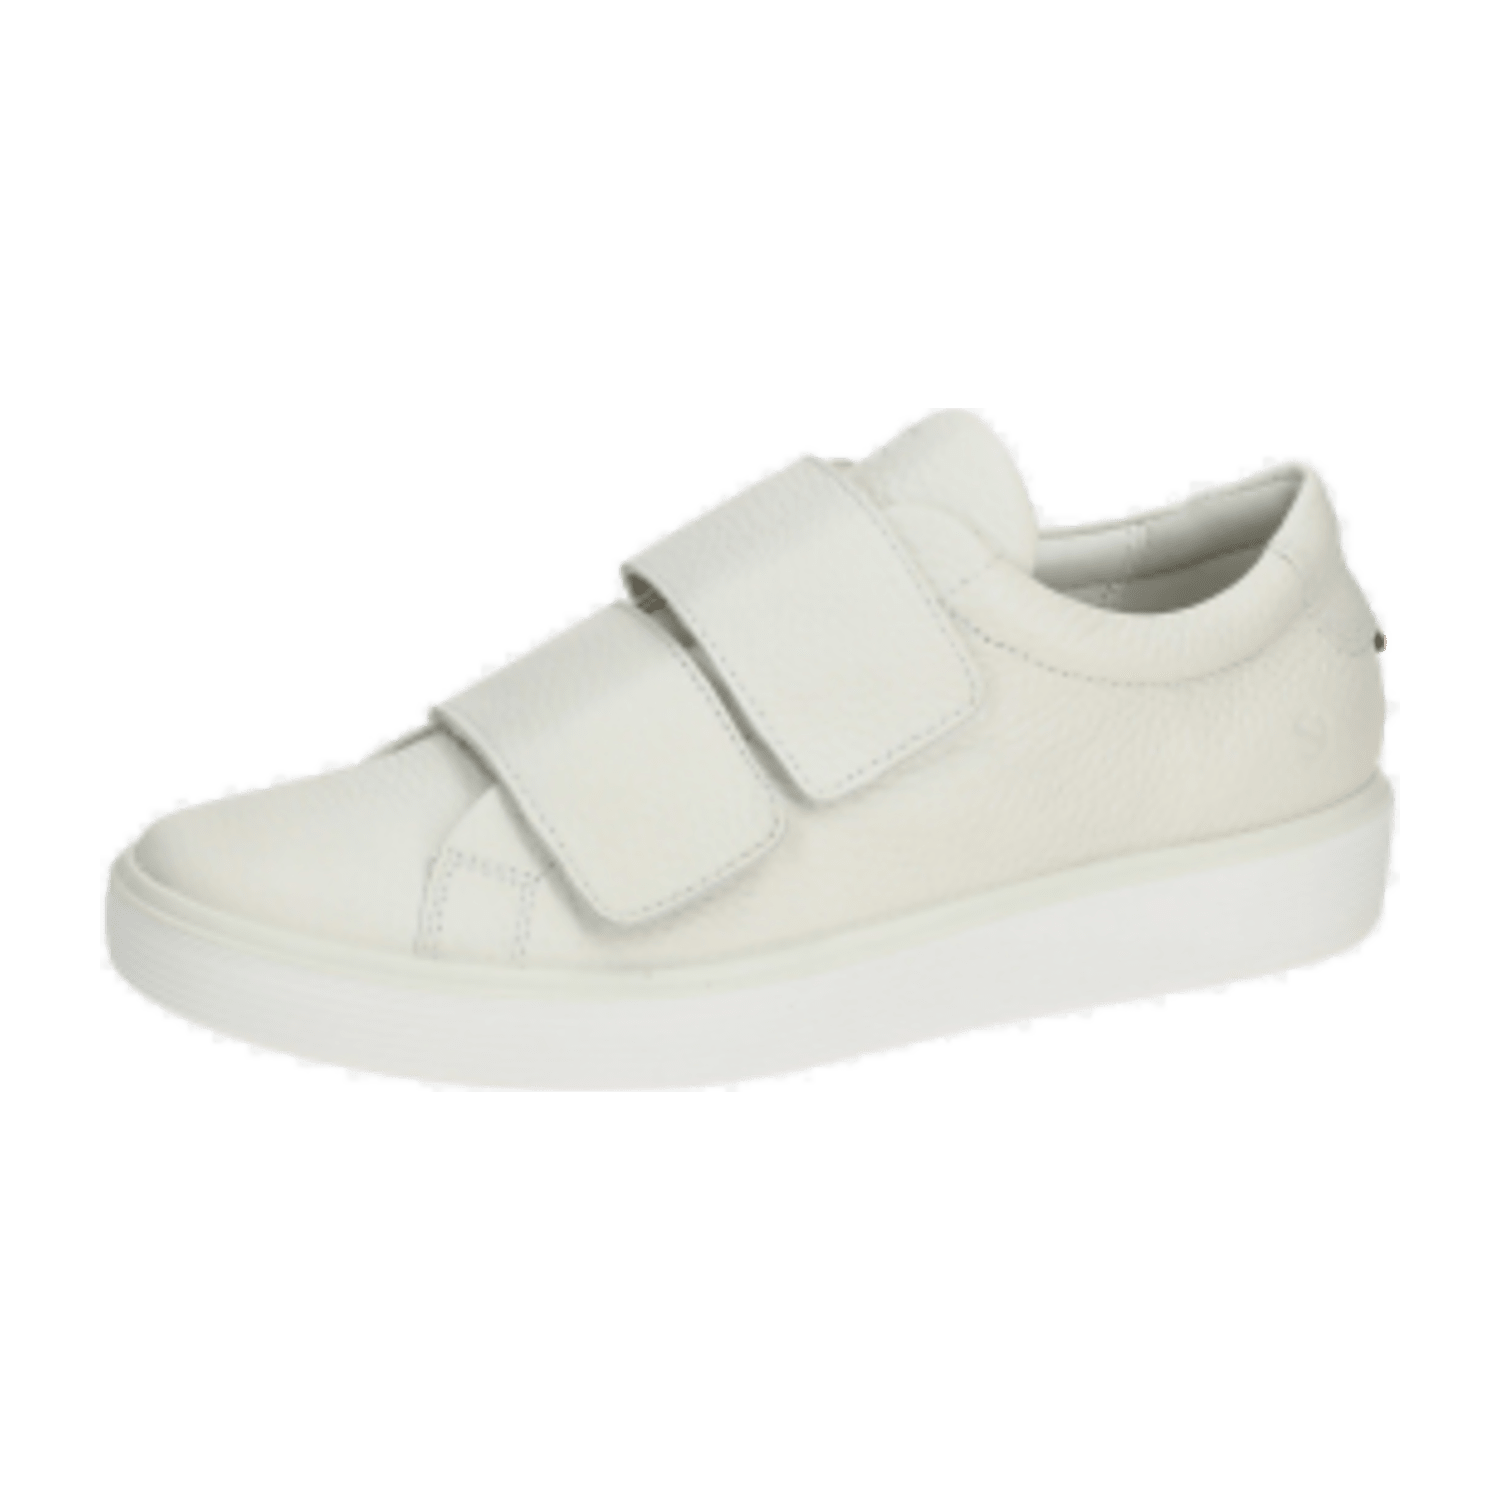 Ecco Soft 60 Schuhe Slipper weiß Damen Klett 219243